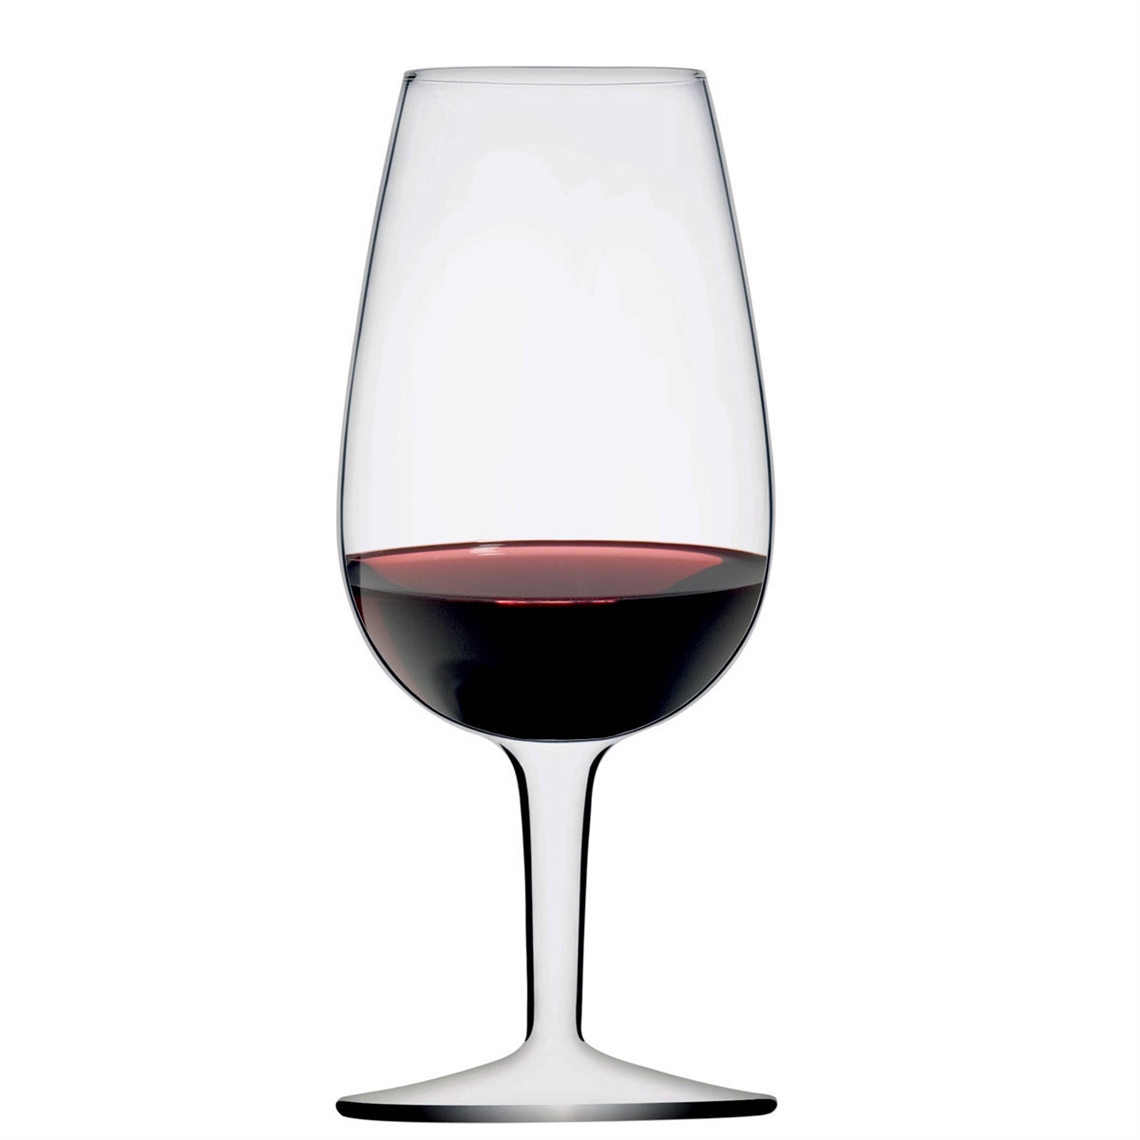 View more restaurant & trade glasses from our Wine Tasting Glasses range